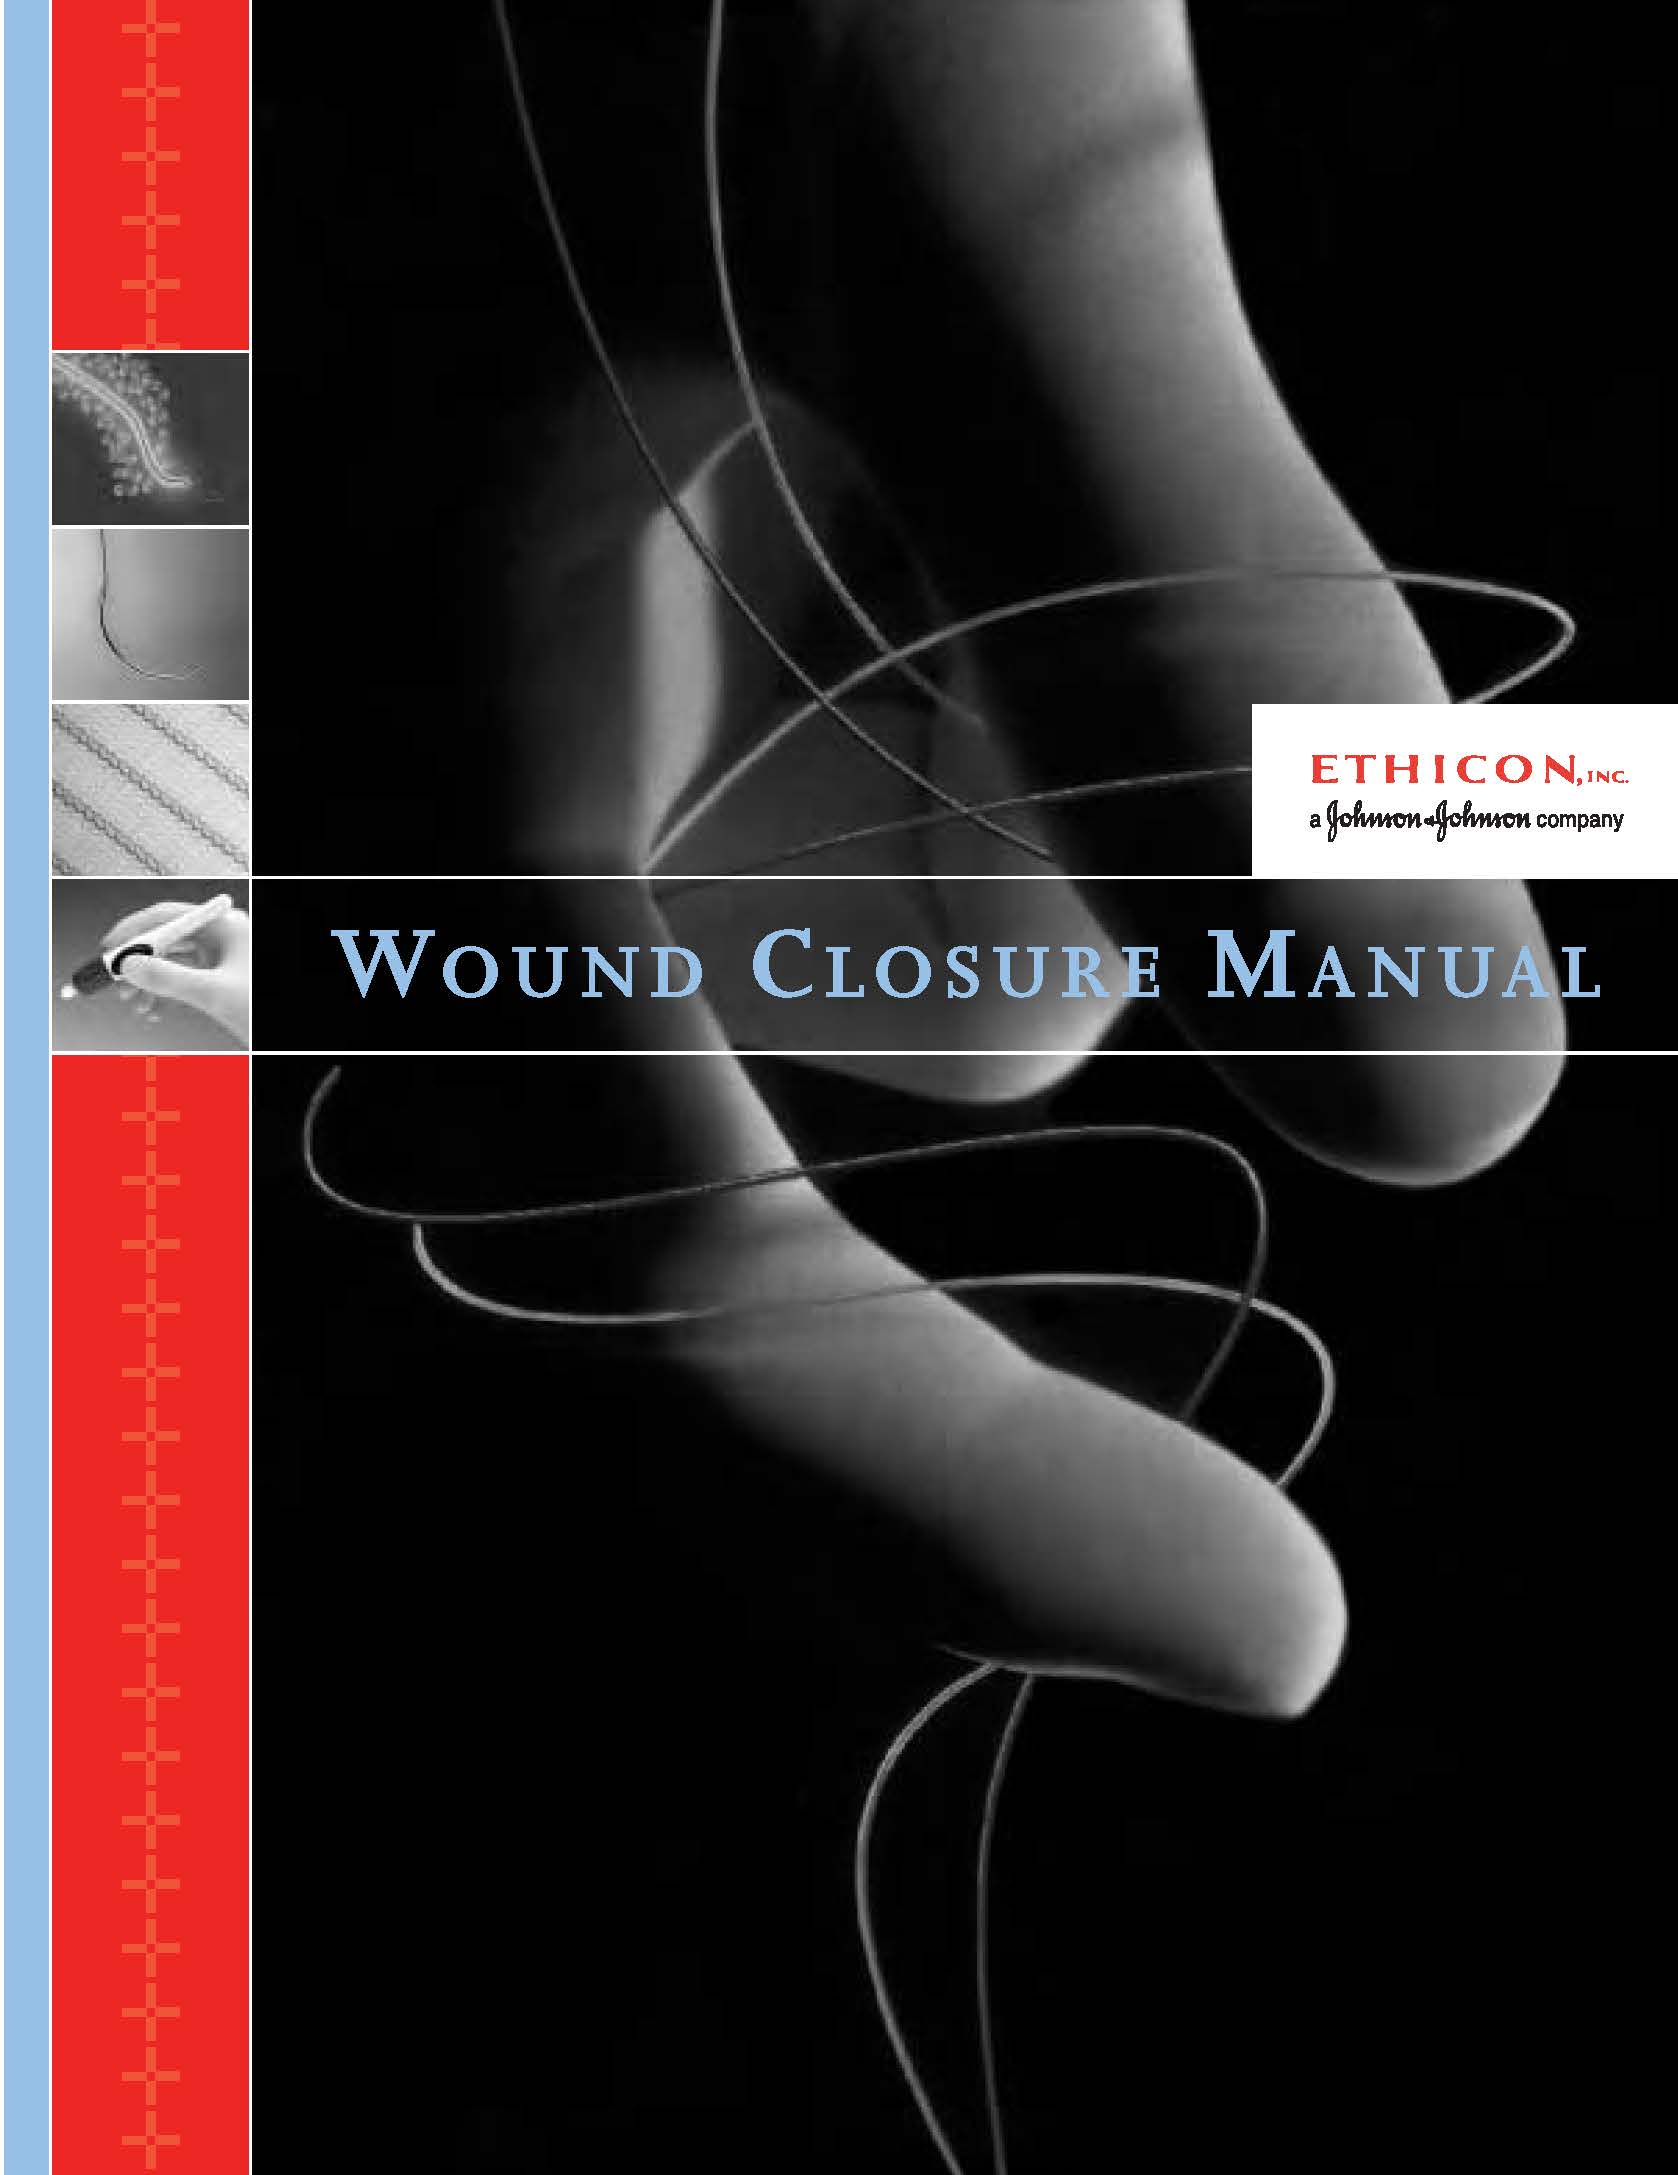 Ethicon Wound Closure Manual